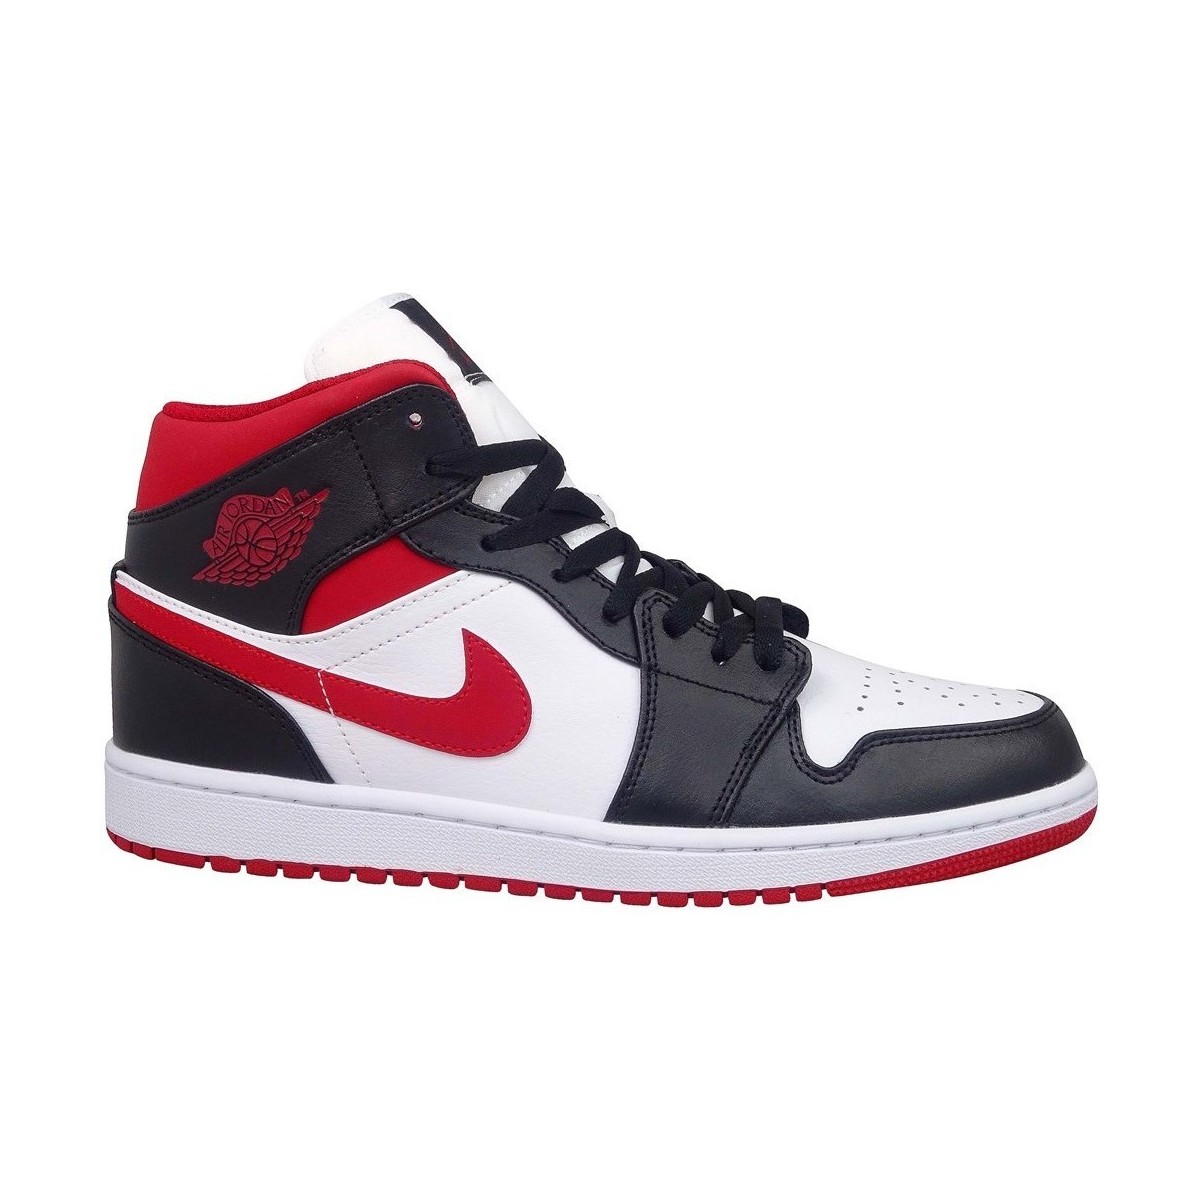 Chaussures Homme Baskets montantes Nike Air Jordan 1 Mid Blanc, Noir, Rouge